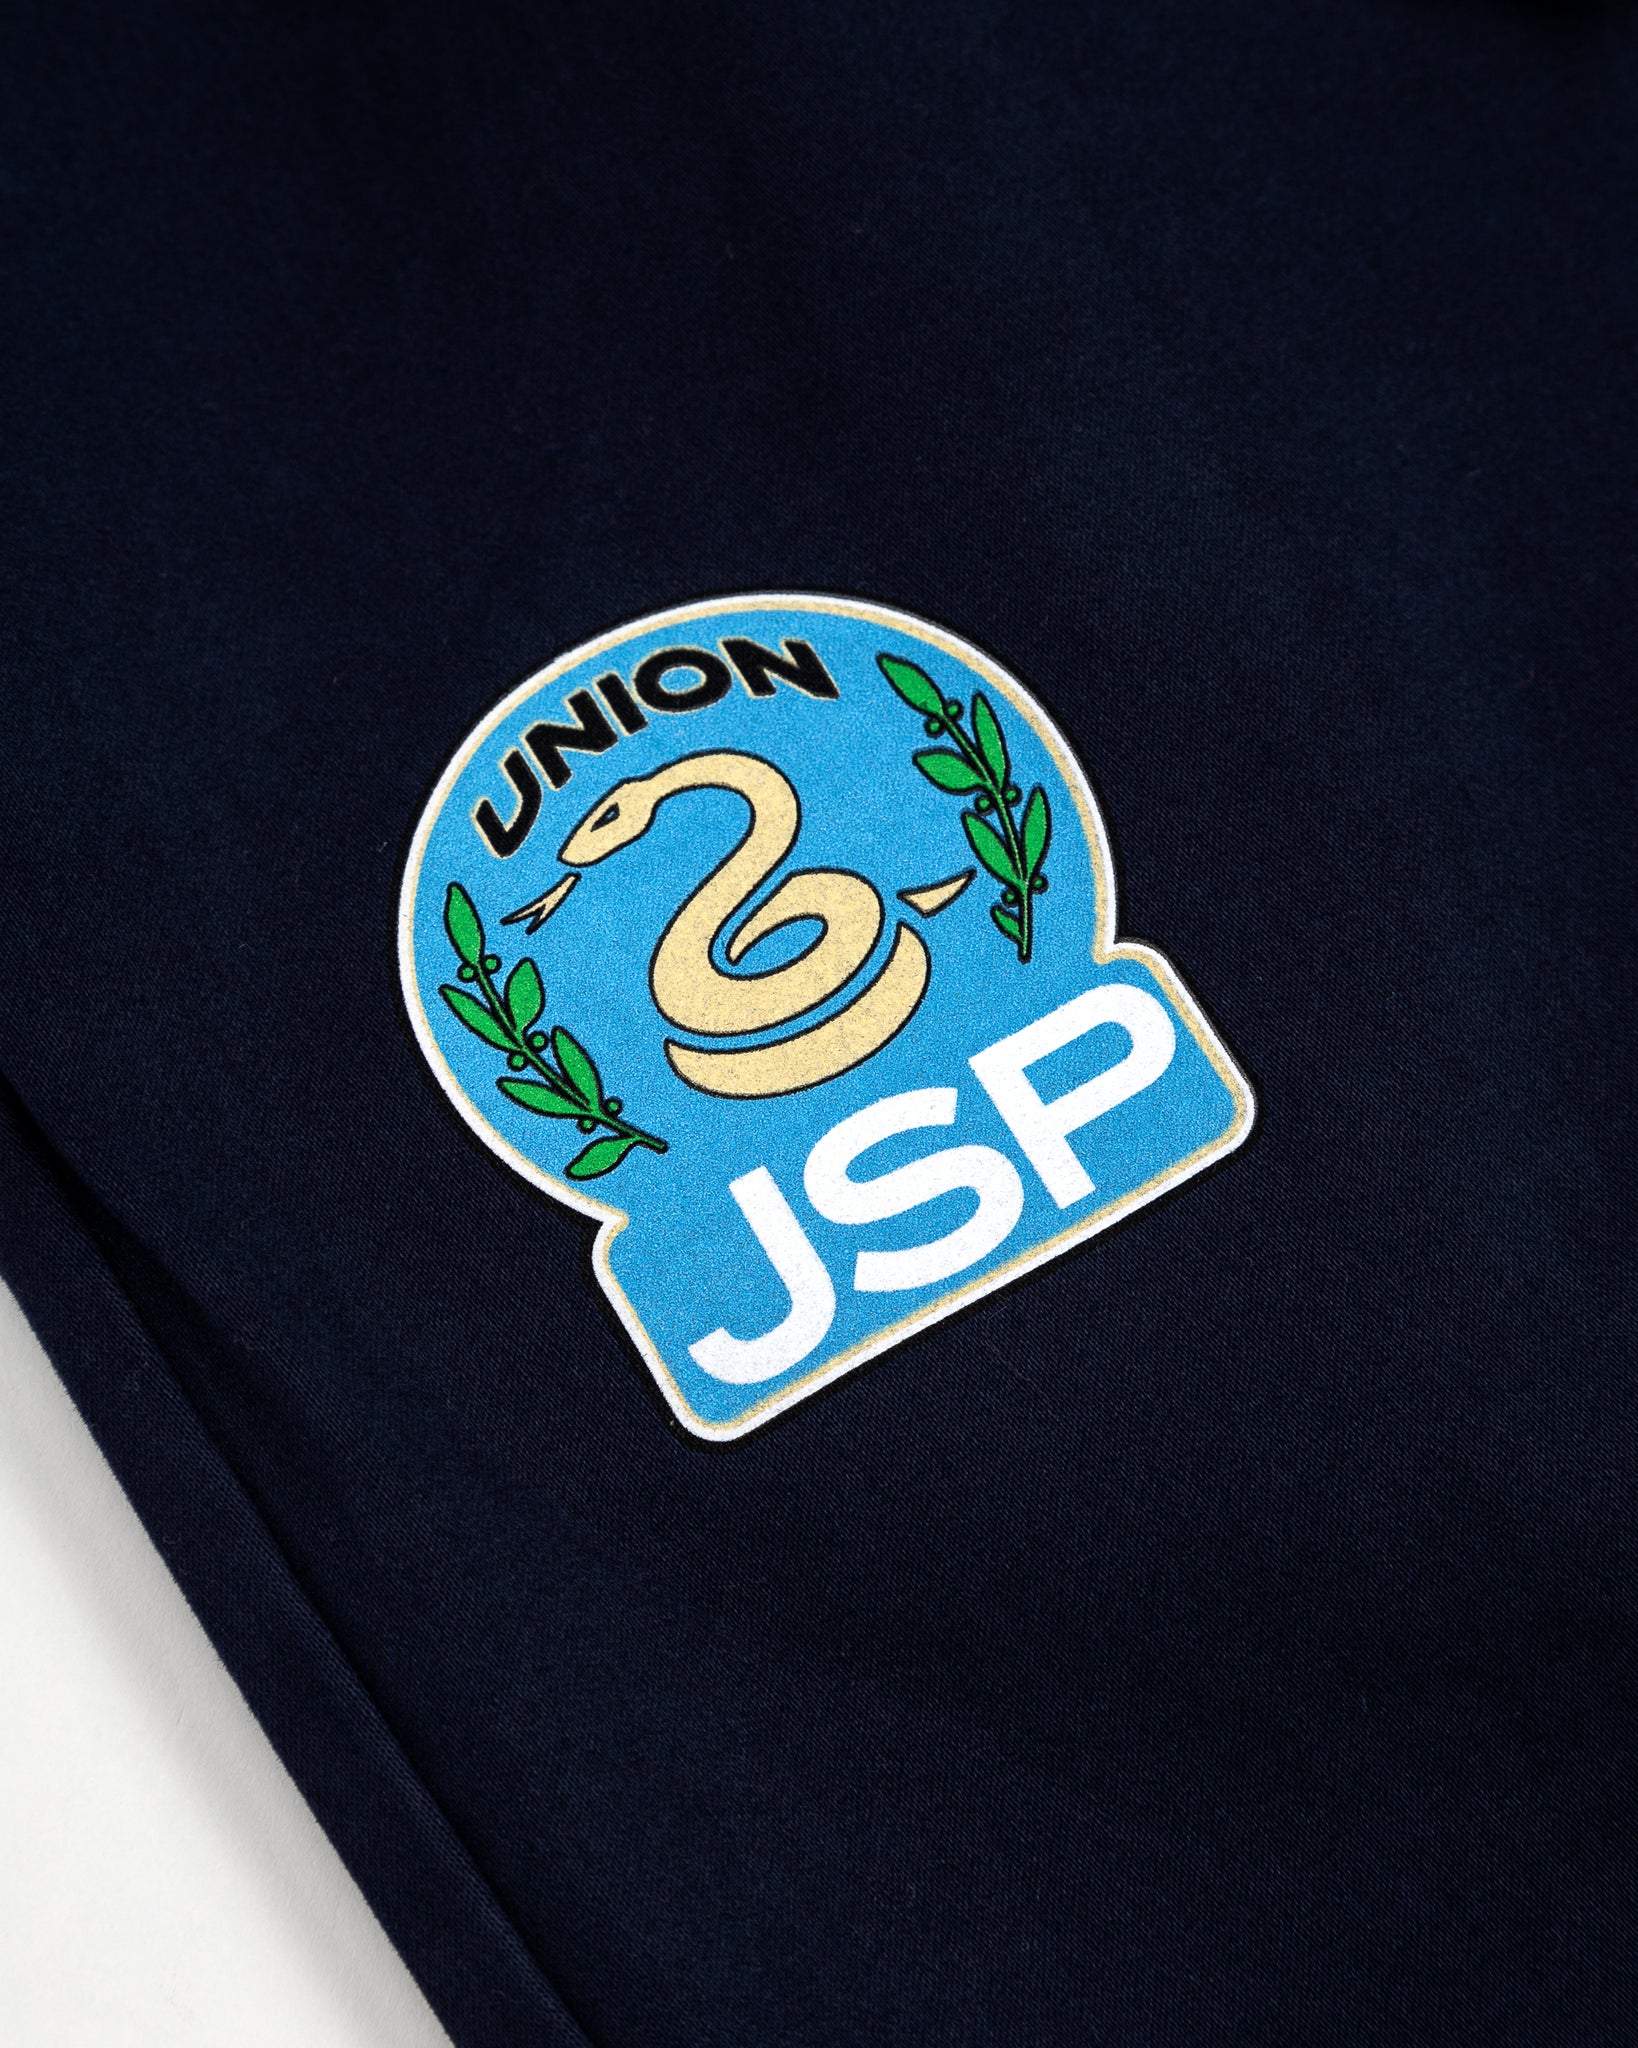 JSP Philadelphia Union Snake Slacker Pant